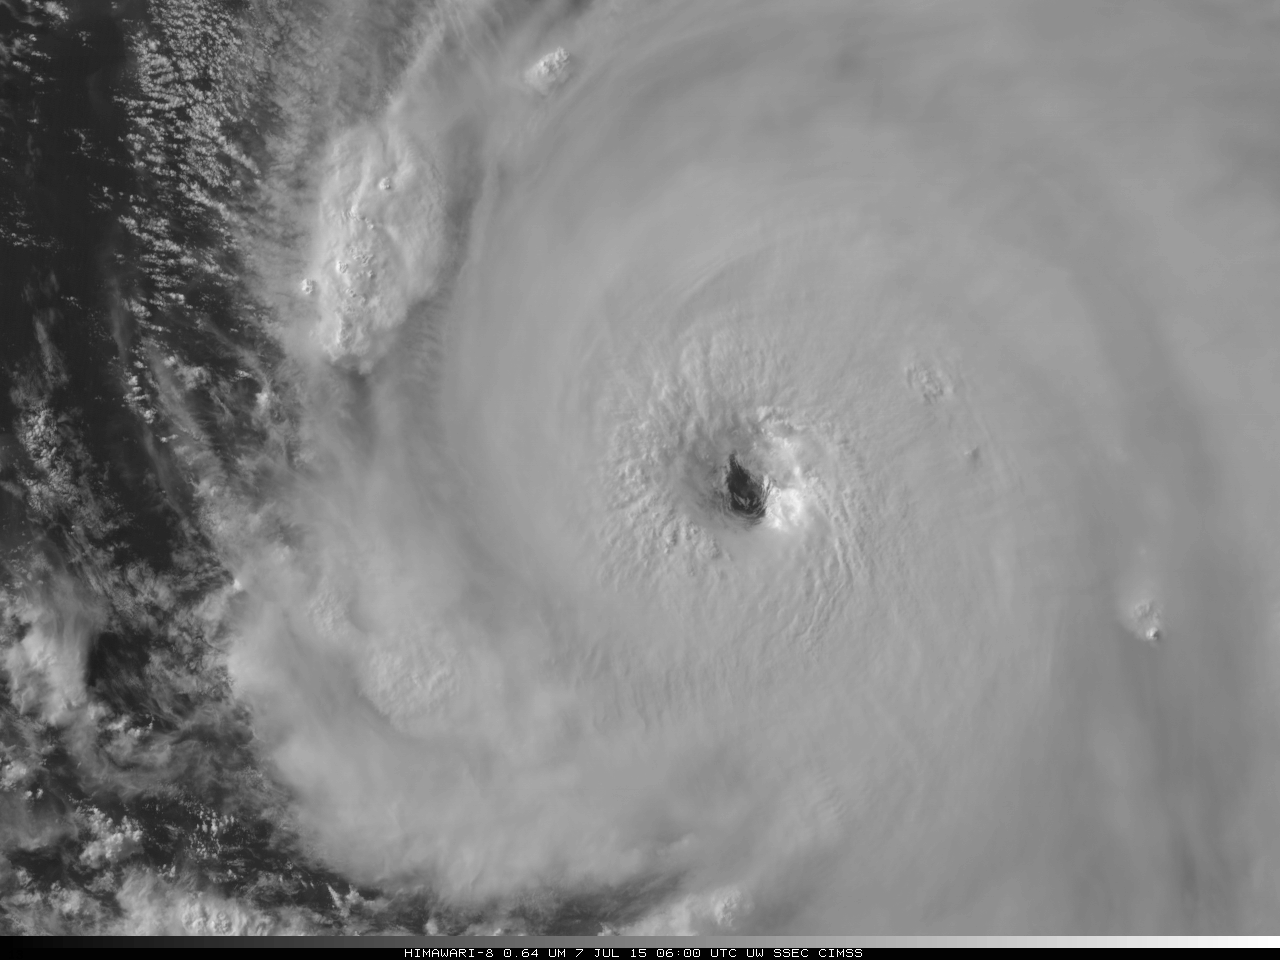 Himawari-8 0.64 µm visible imagery, 0400 UTC 5 July 2015 - 0700 UTC 7 July 2015, showing Typhoon Nangka (Click to animate)